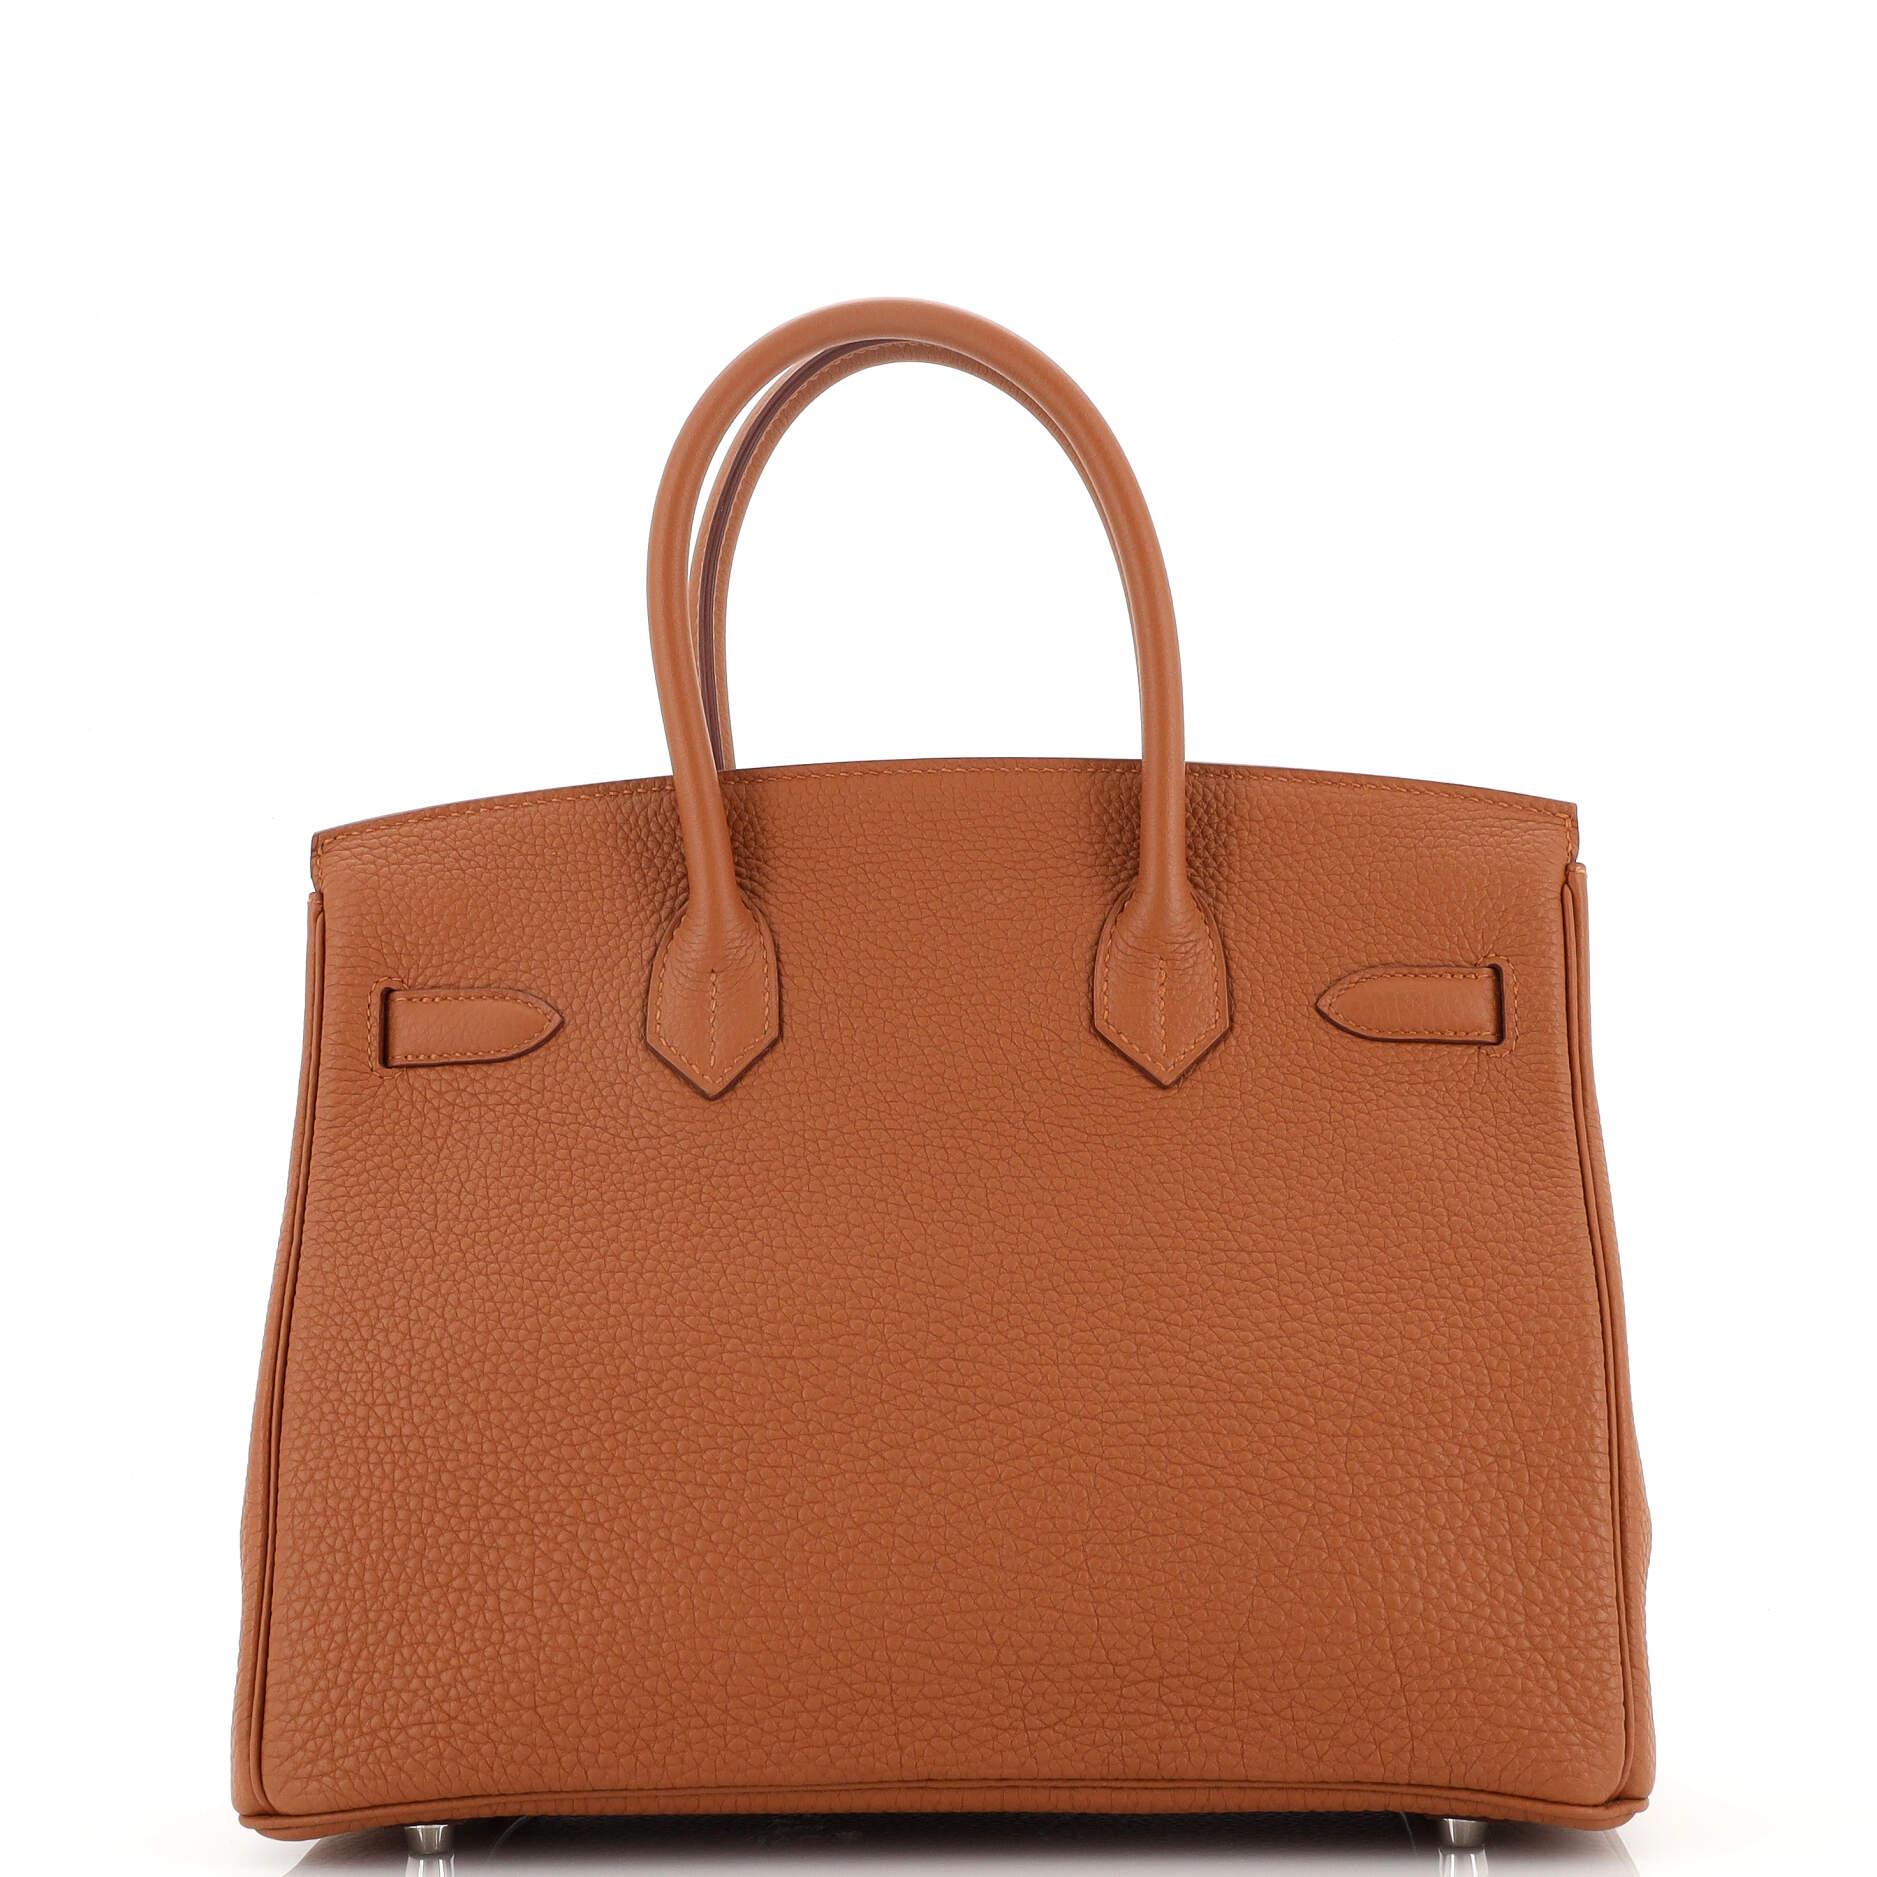 Women's Hermes Officier Birkin Bag Limited Edition Togo with Swift 30